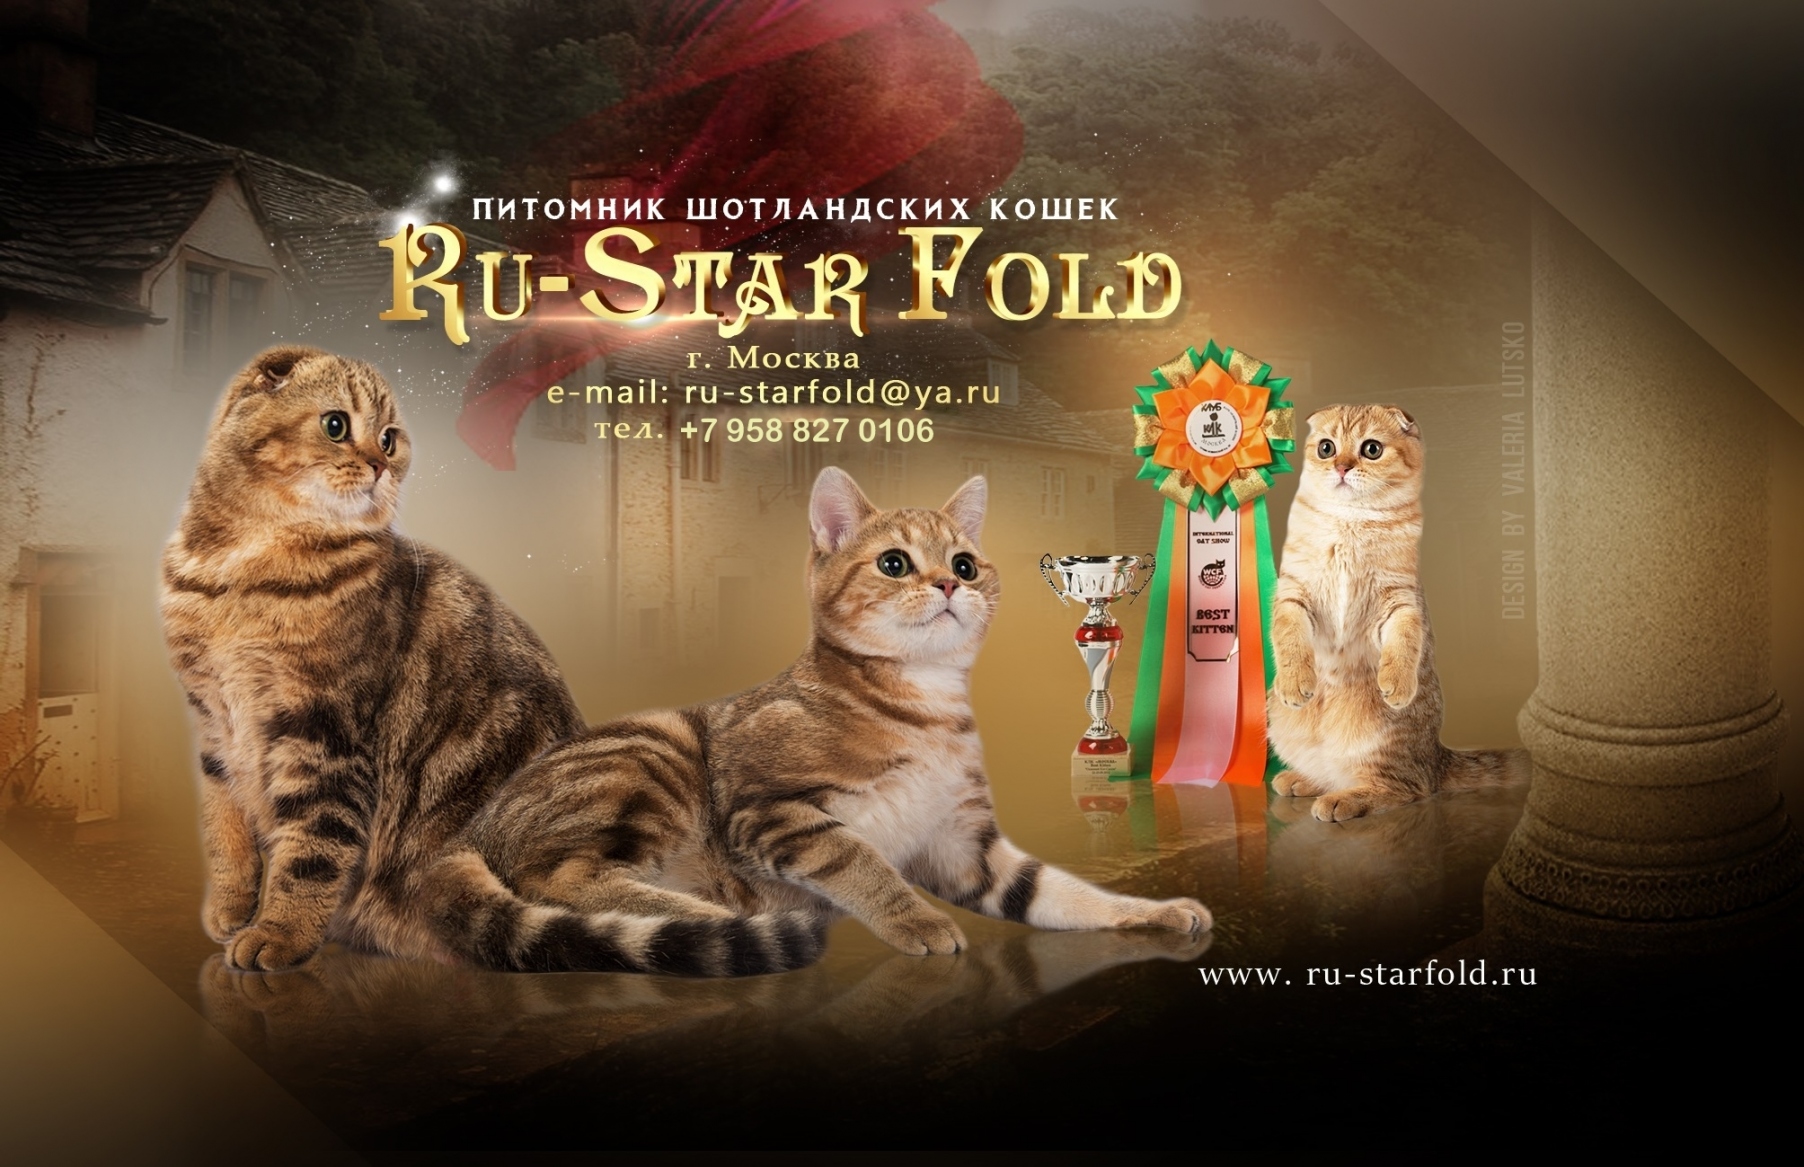 Питомник кошек "Ru-Star Fold"